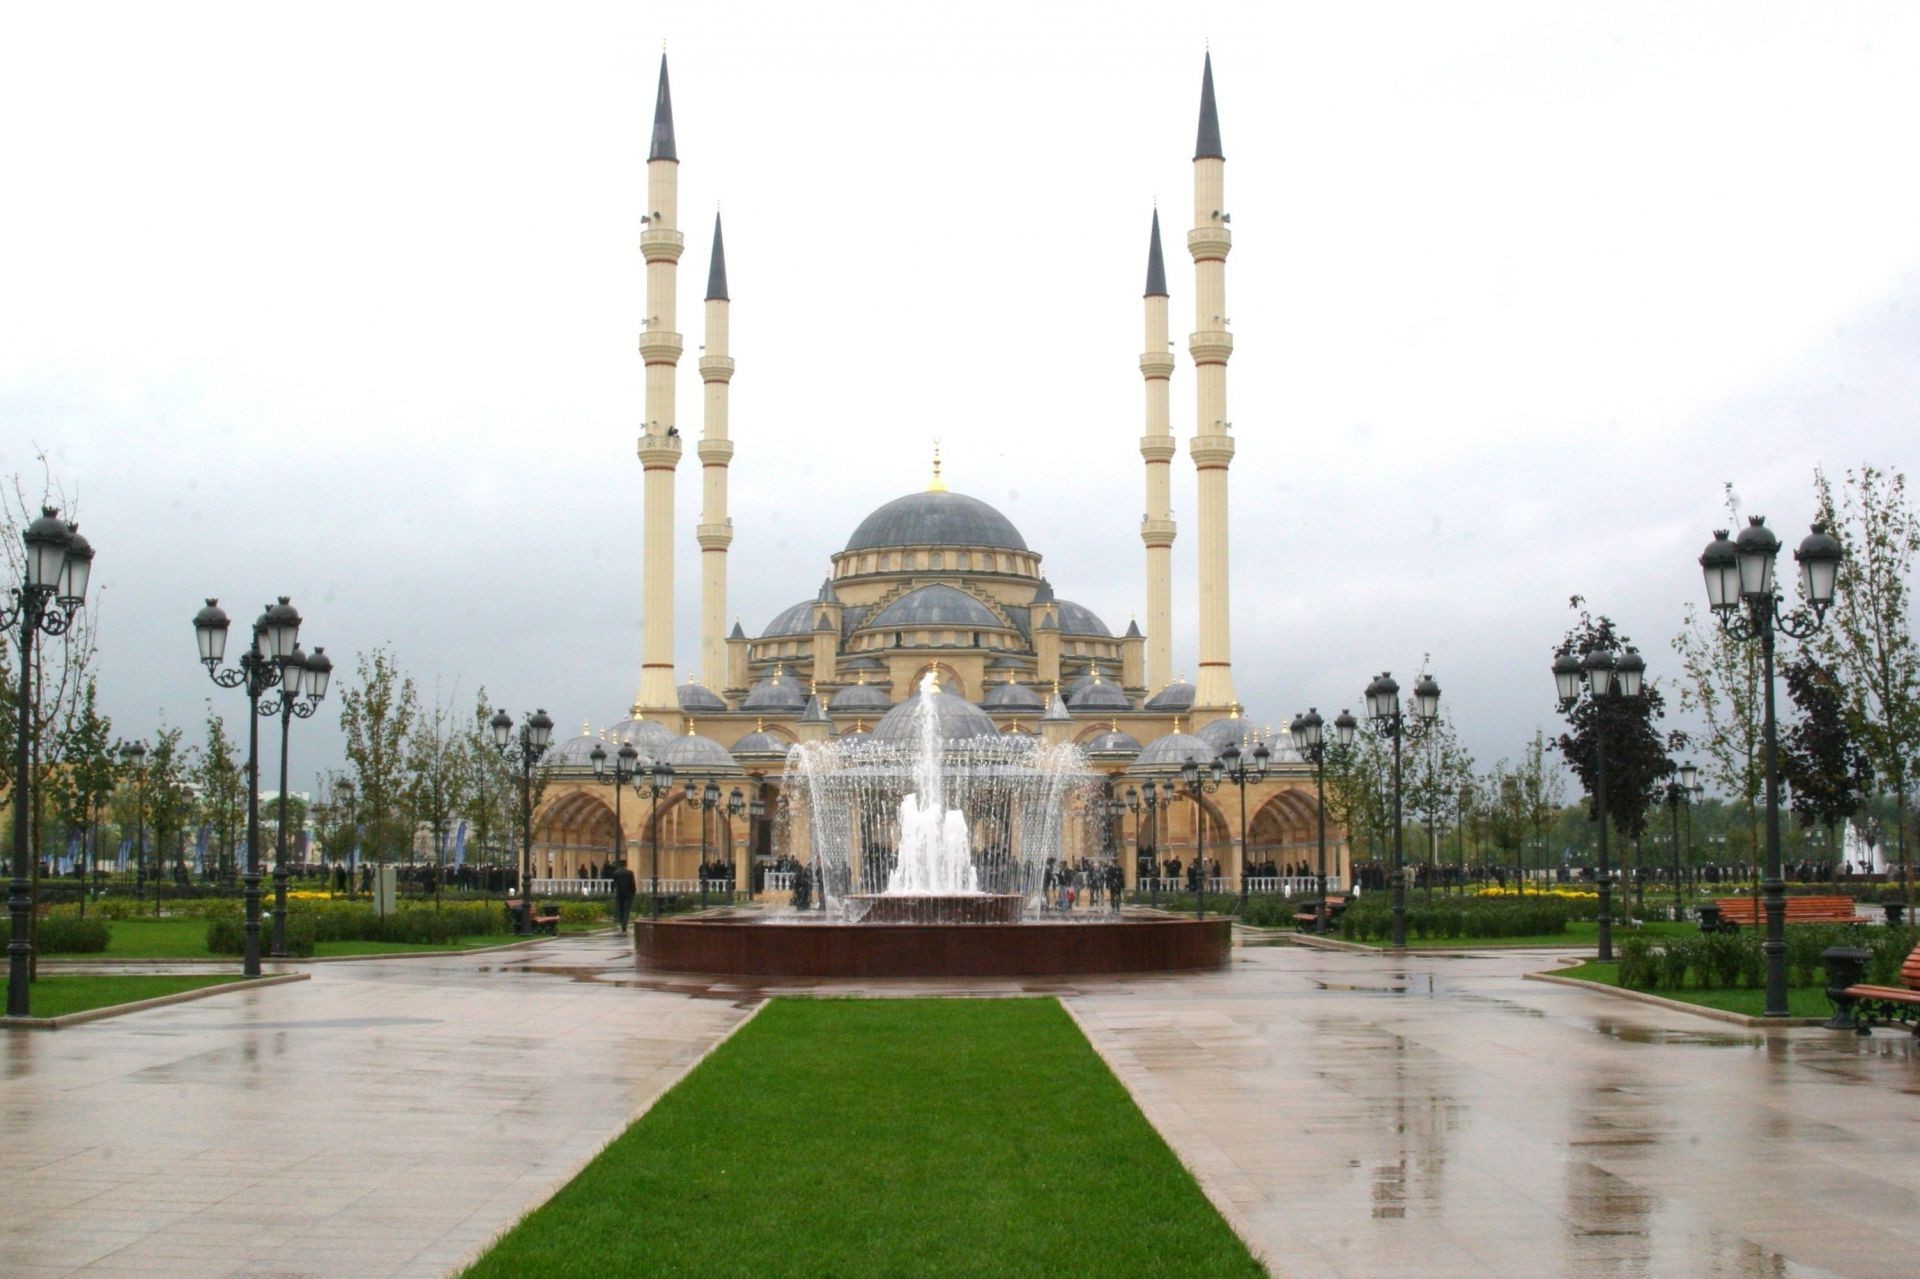 fountains minaret religion architecture dome building travel landmark tourism sky city temple monument outdoors religious ottoman museum